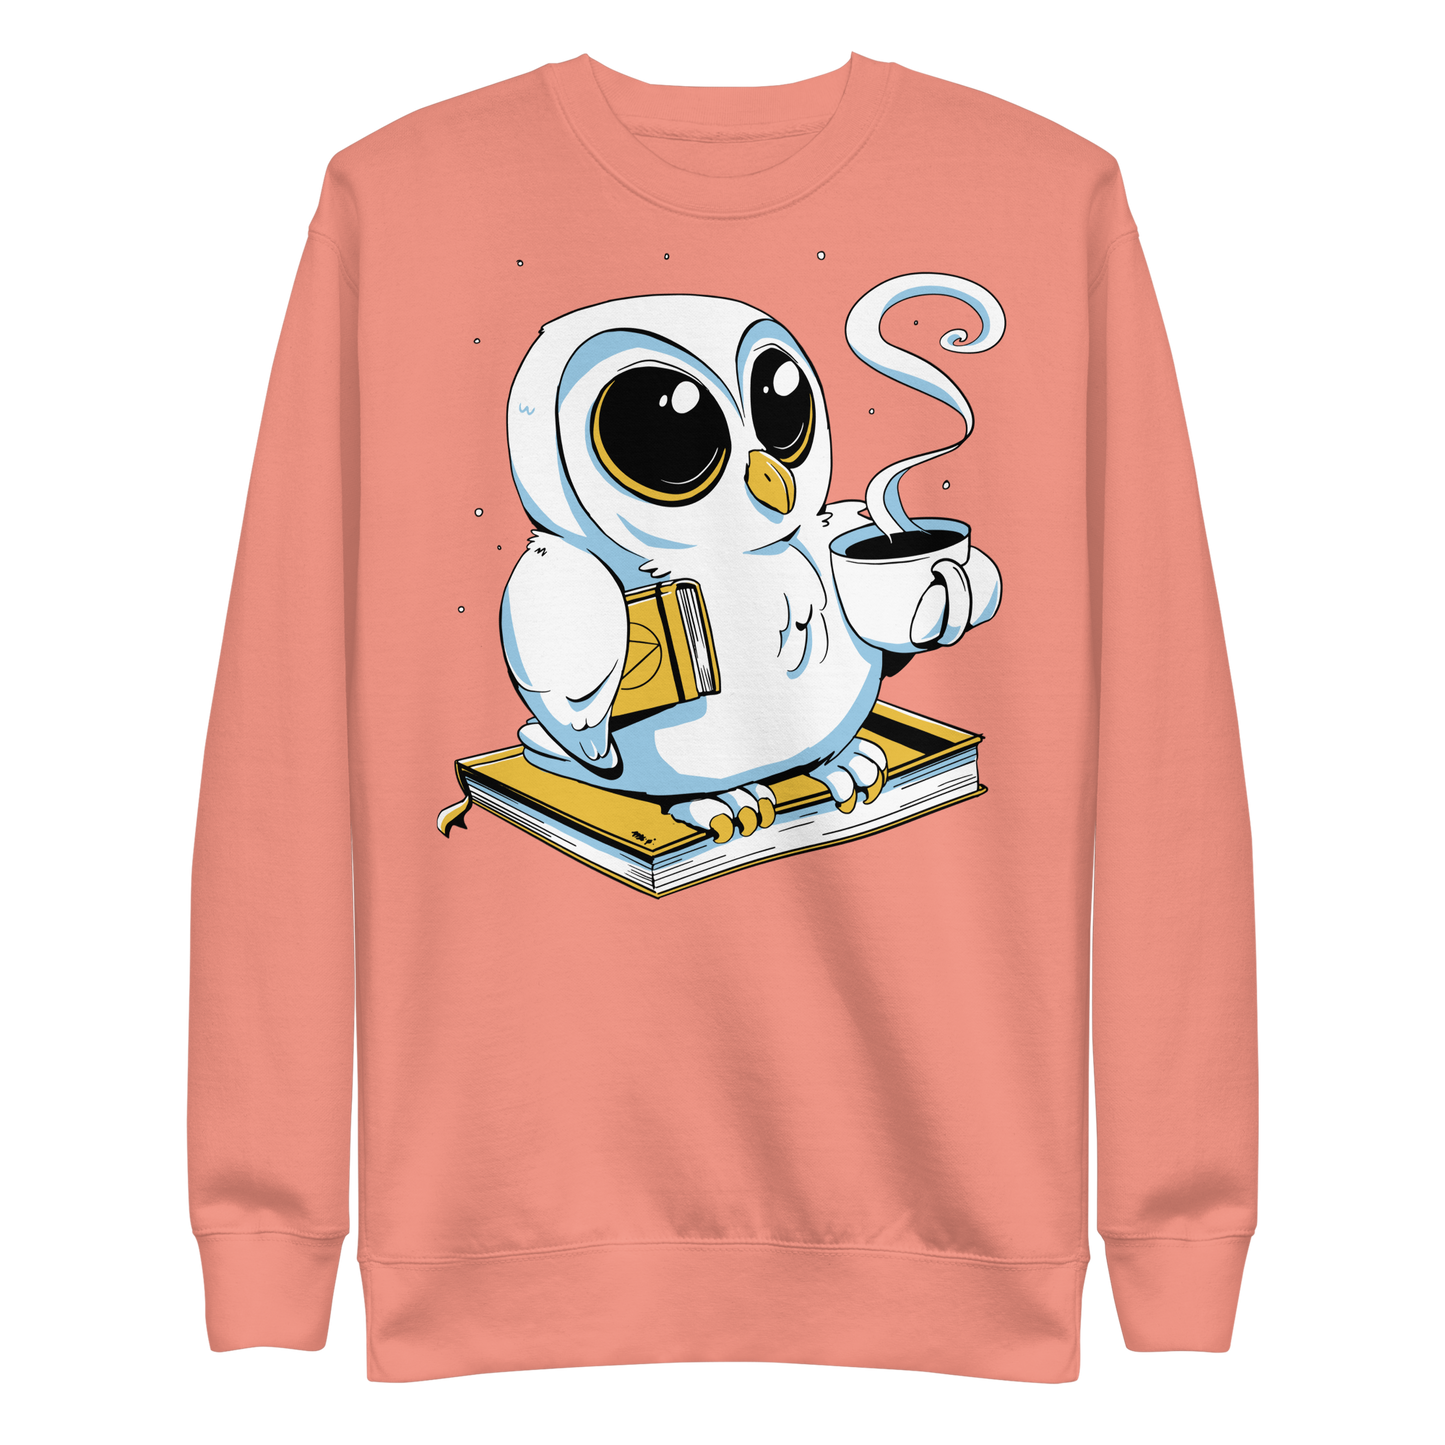 Owl with biooks and coffee | Unisex Premium Sweatshirt